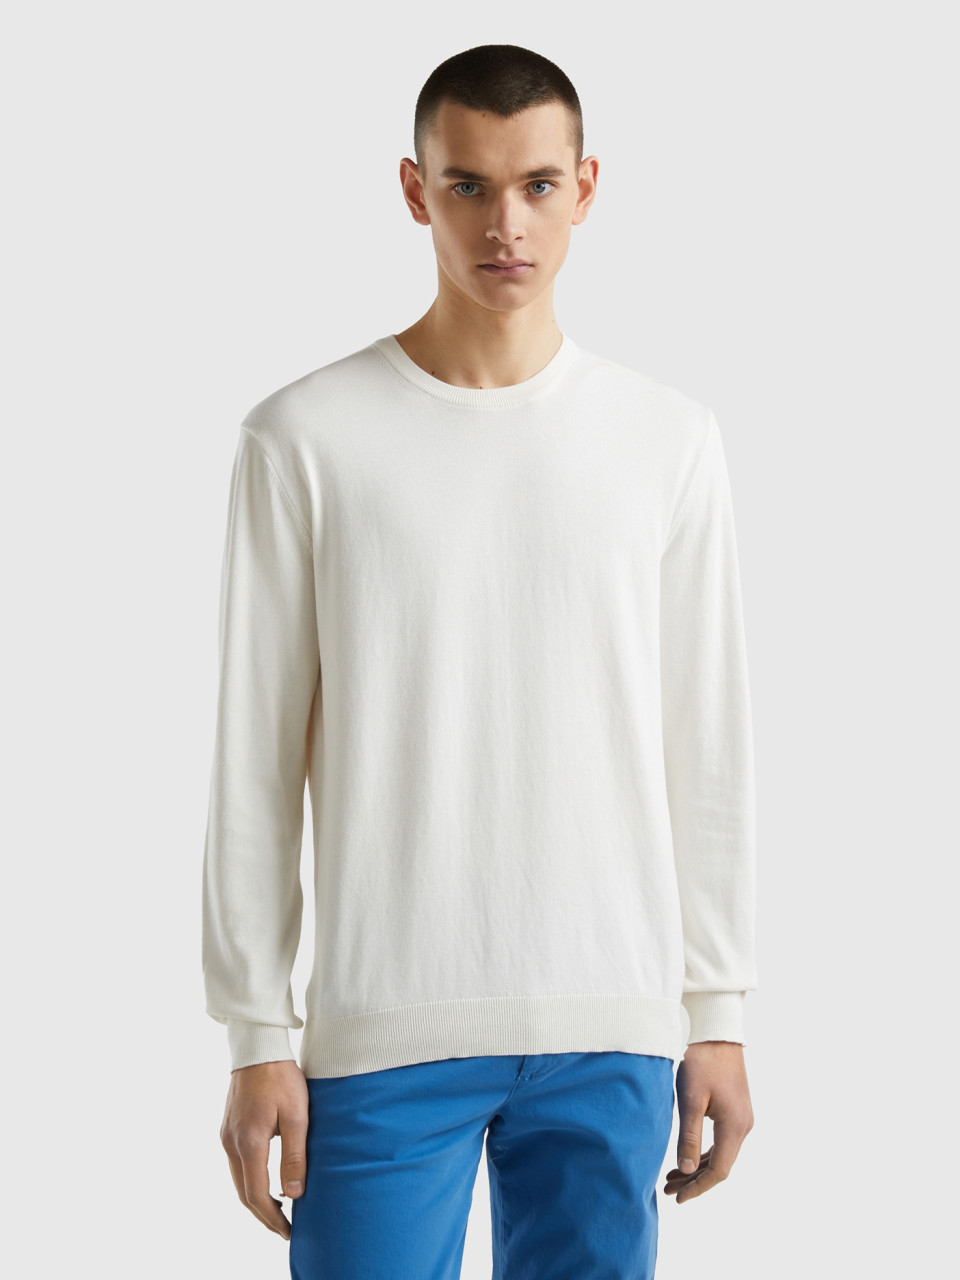 Benetton, Crew Neck Sweater In 100% Cotton, Creamy White, Men